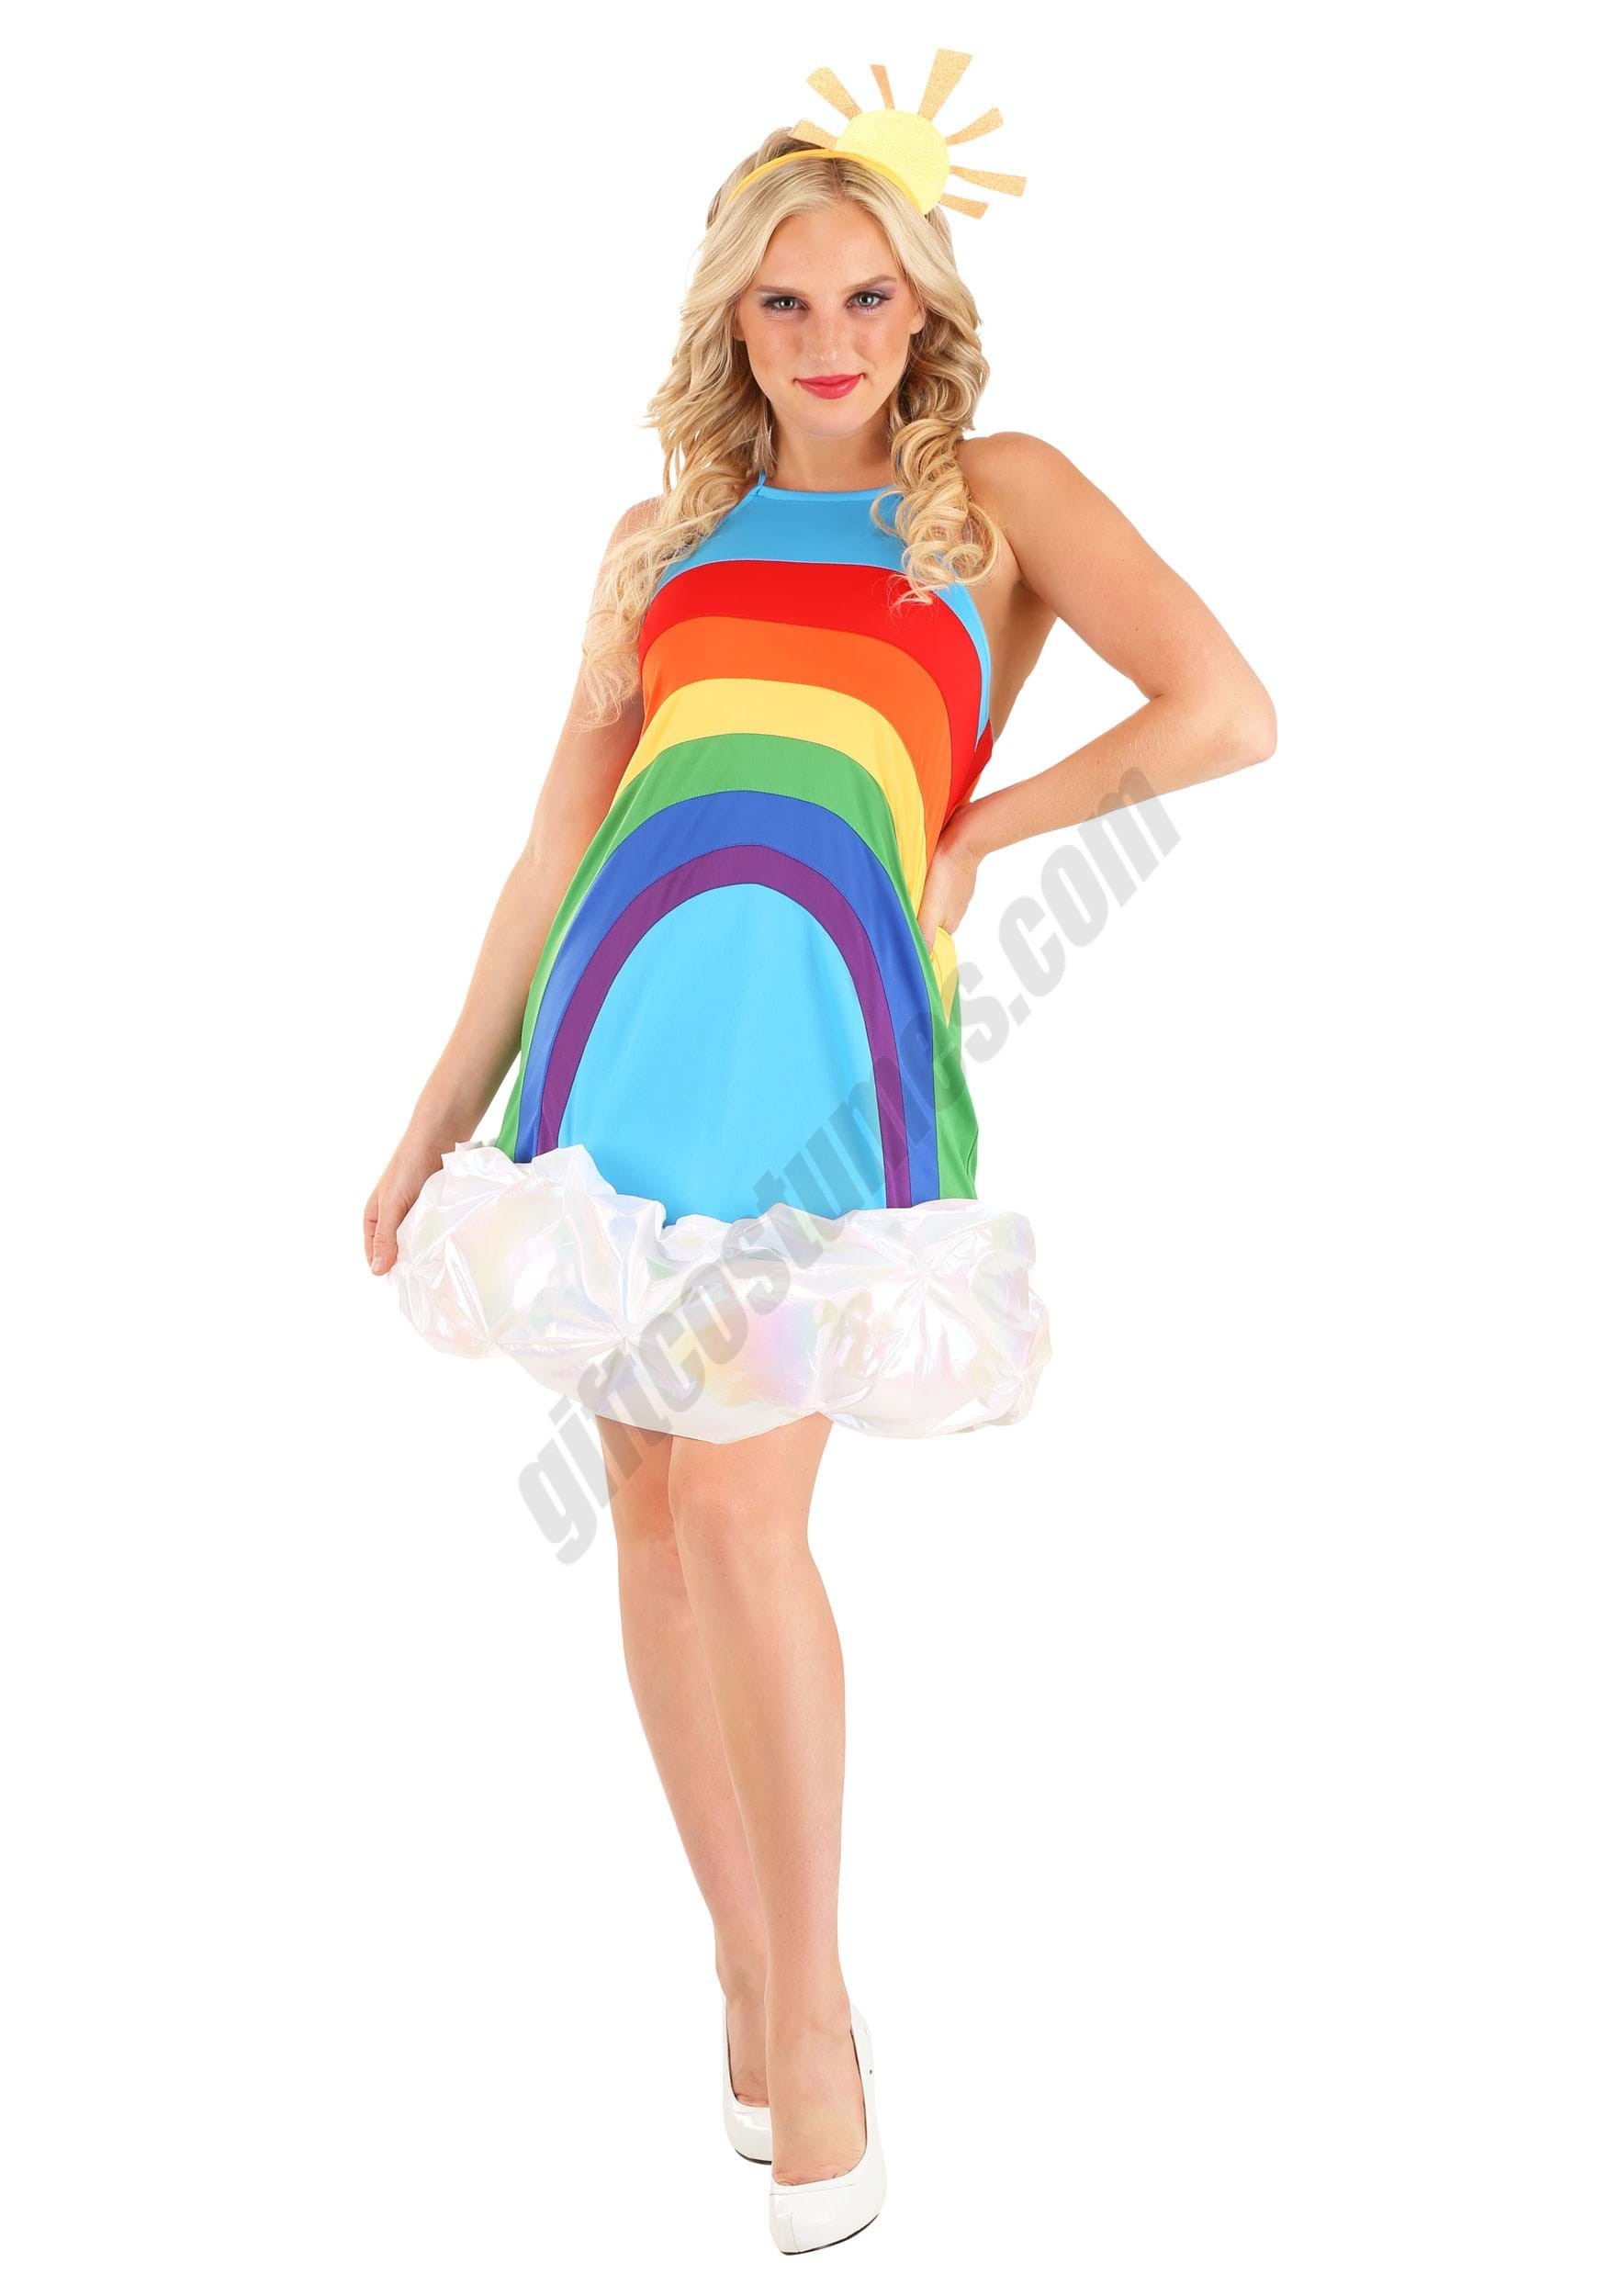 Rainbow Dress Costume for Women - Rainbow Dress Costume for Women